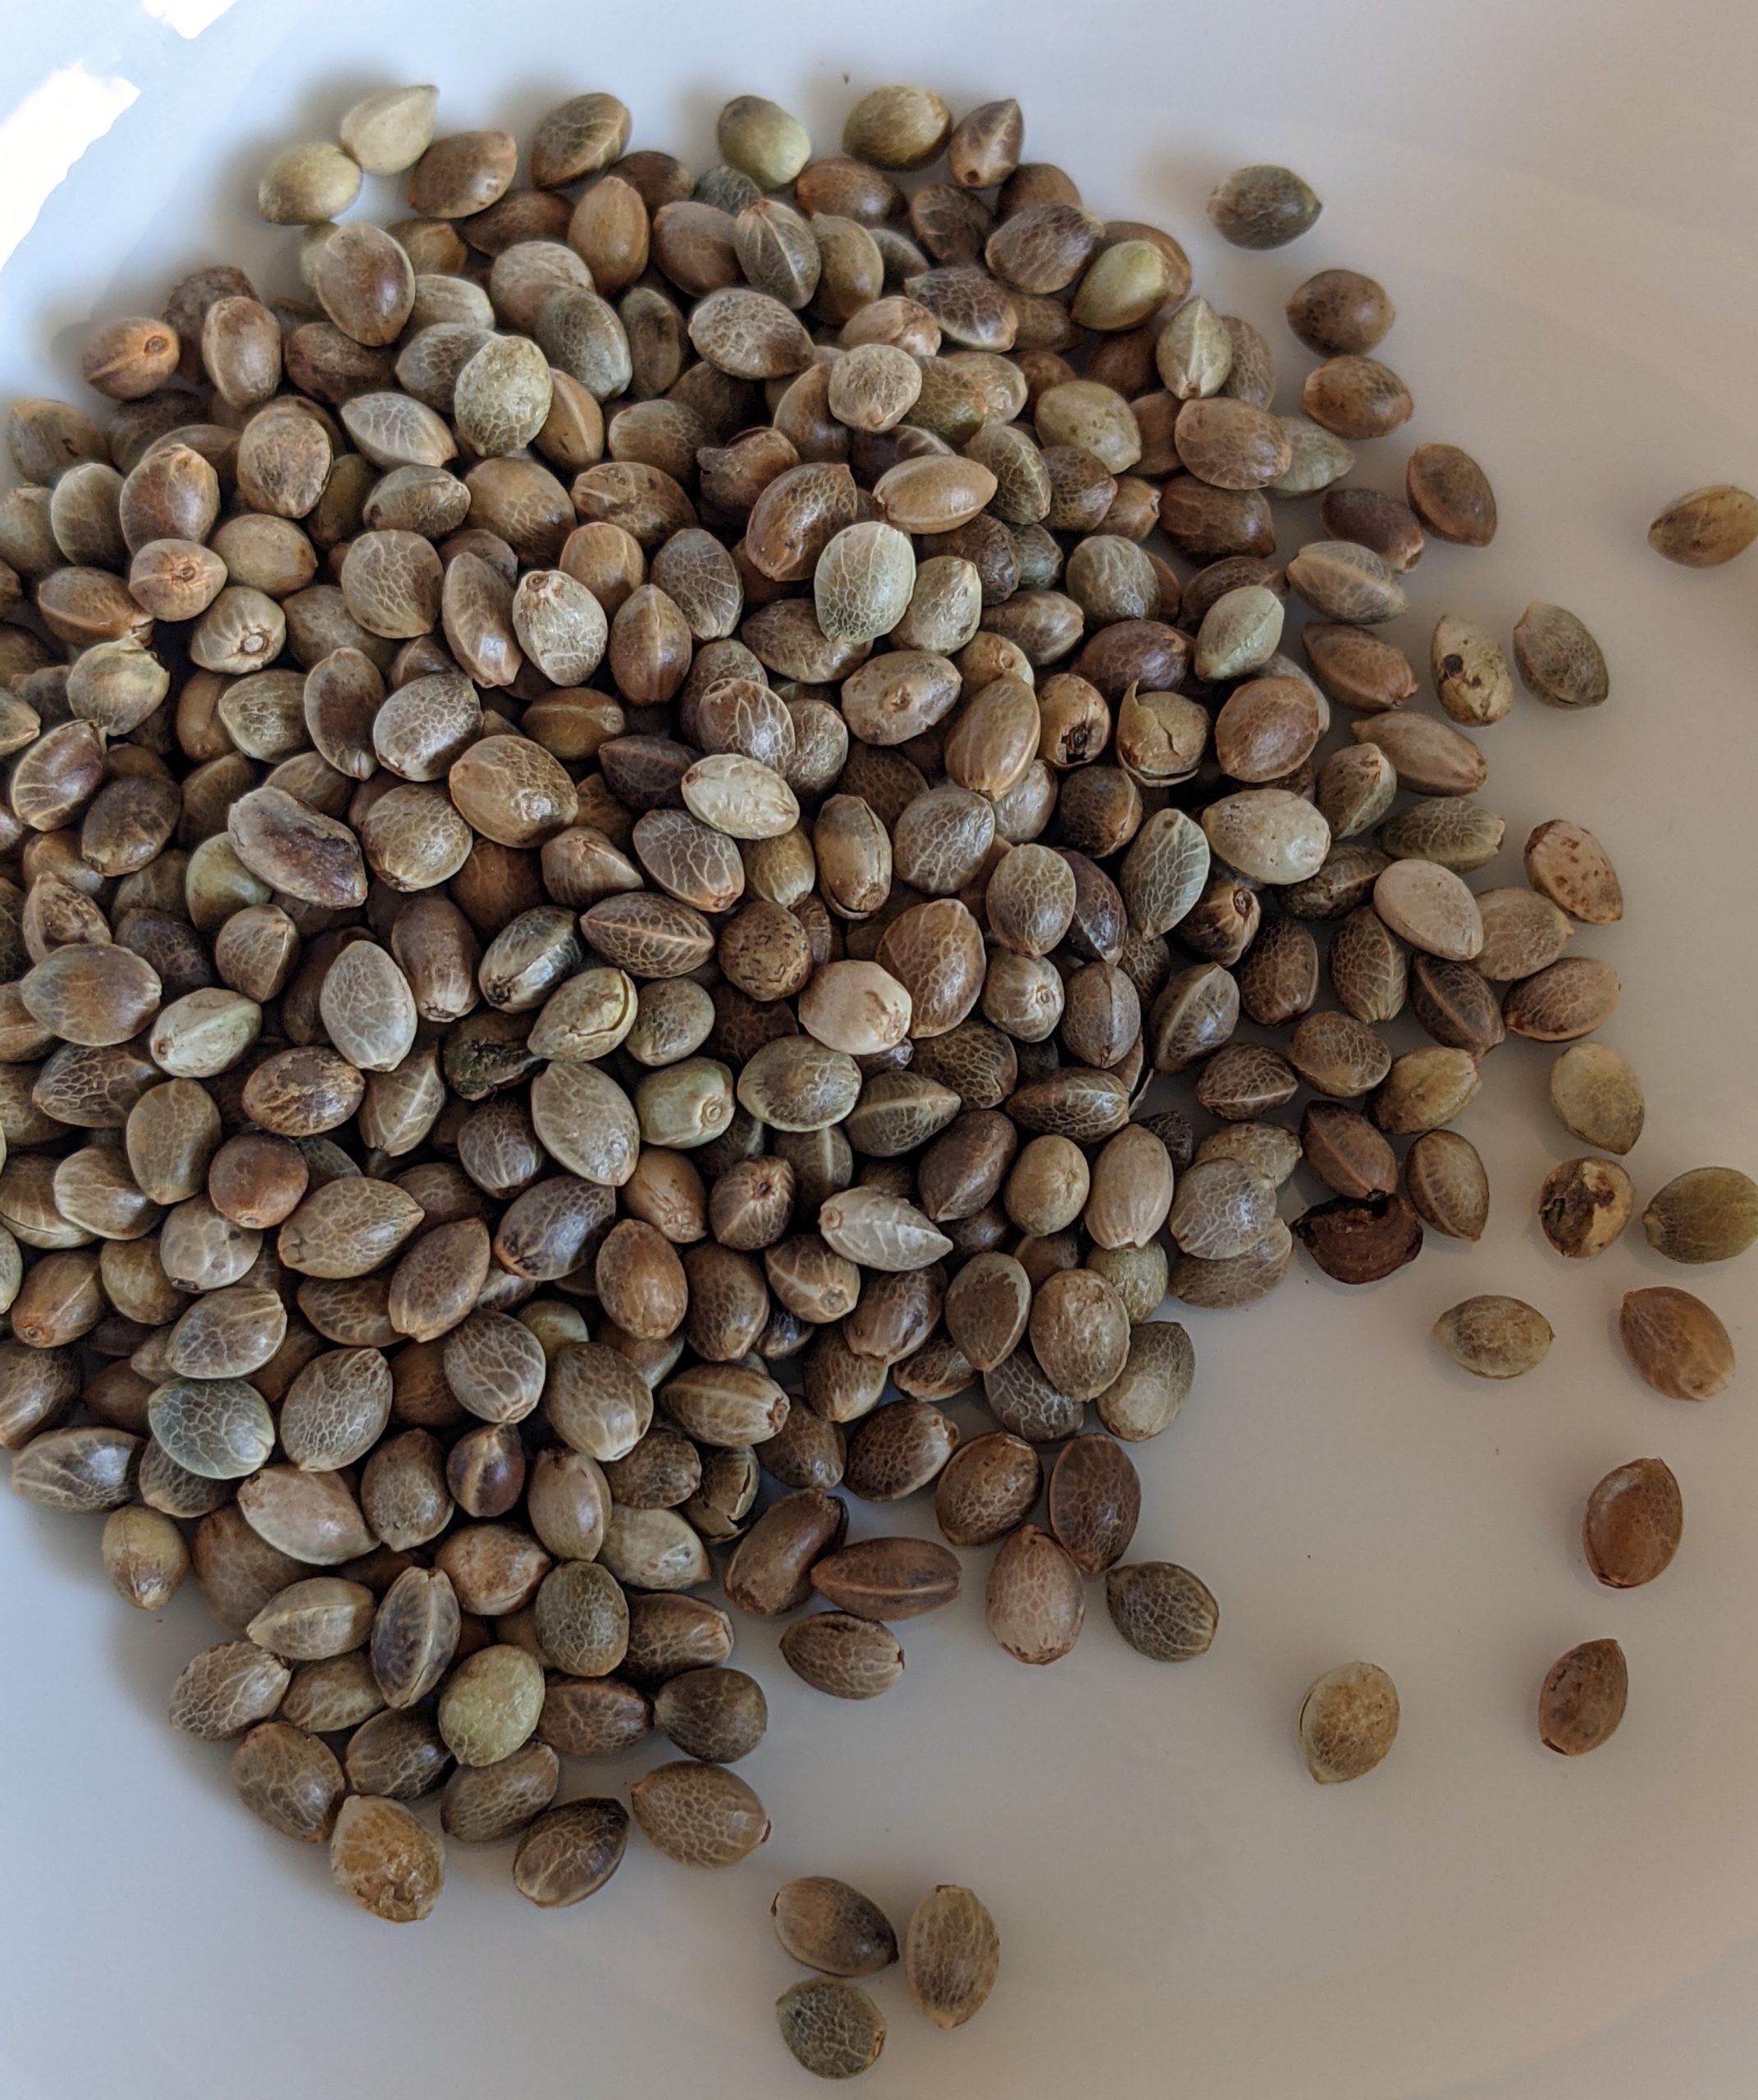 hemp-seeds-nutrition-benefits